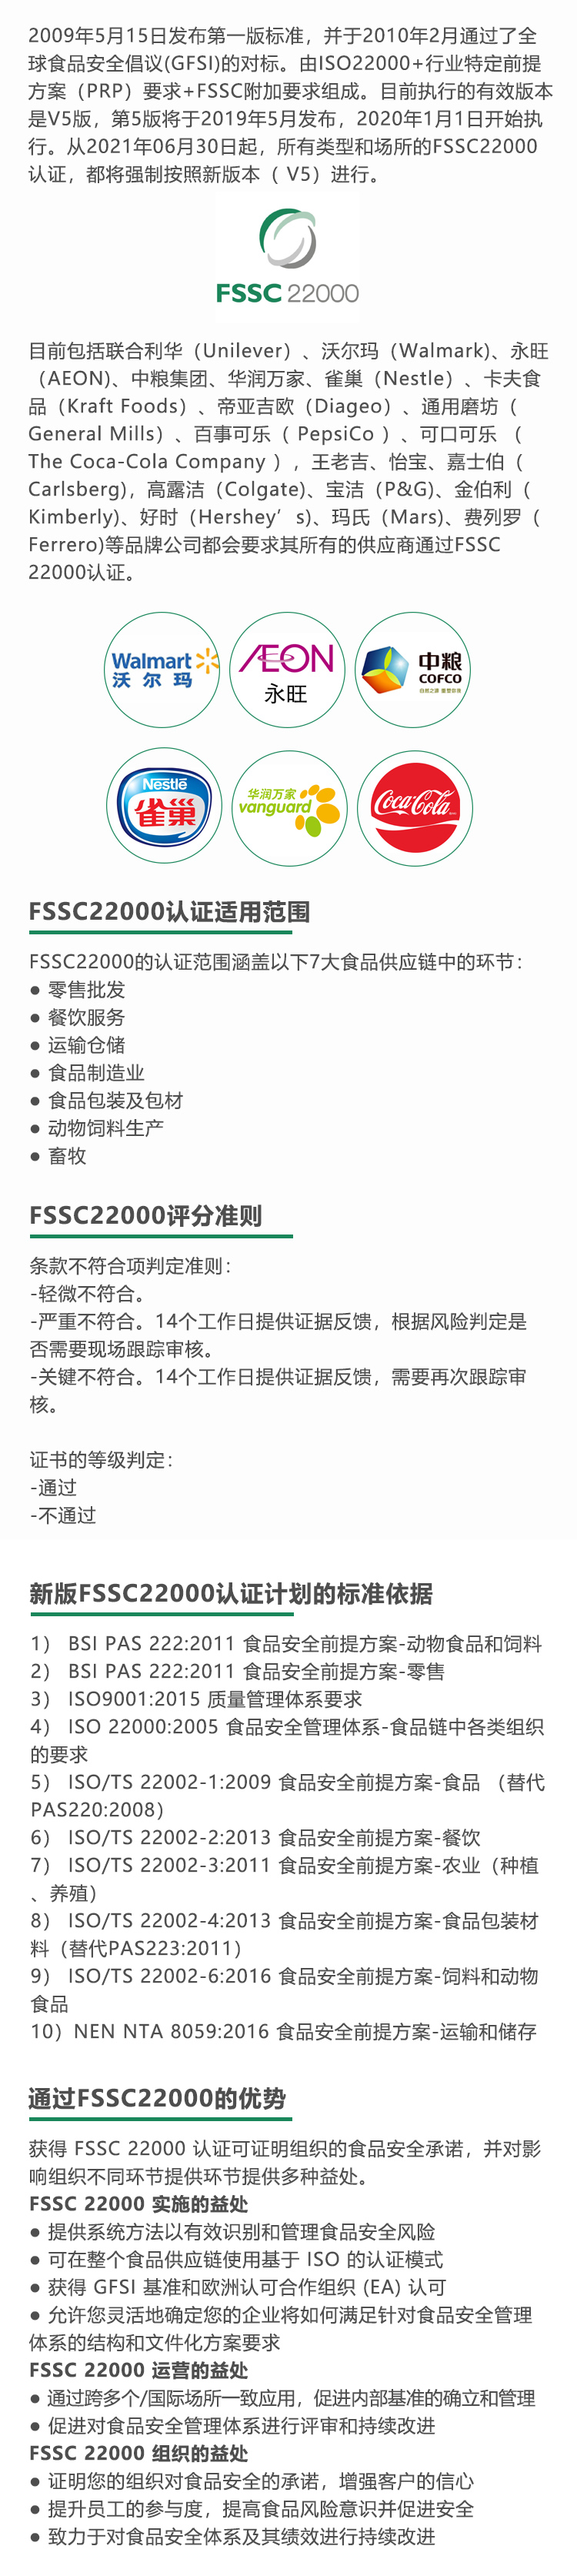 FSSC22000认证(图1)